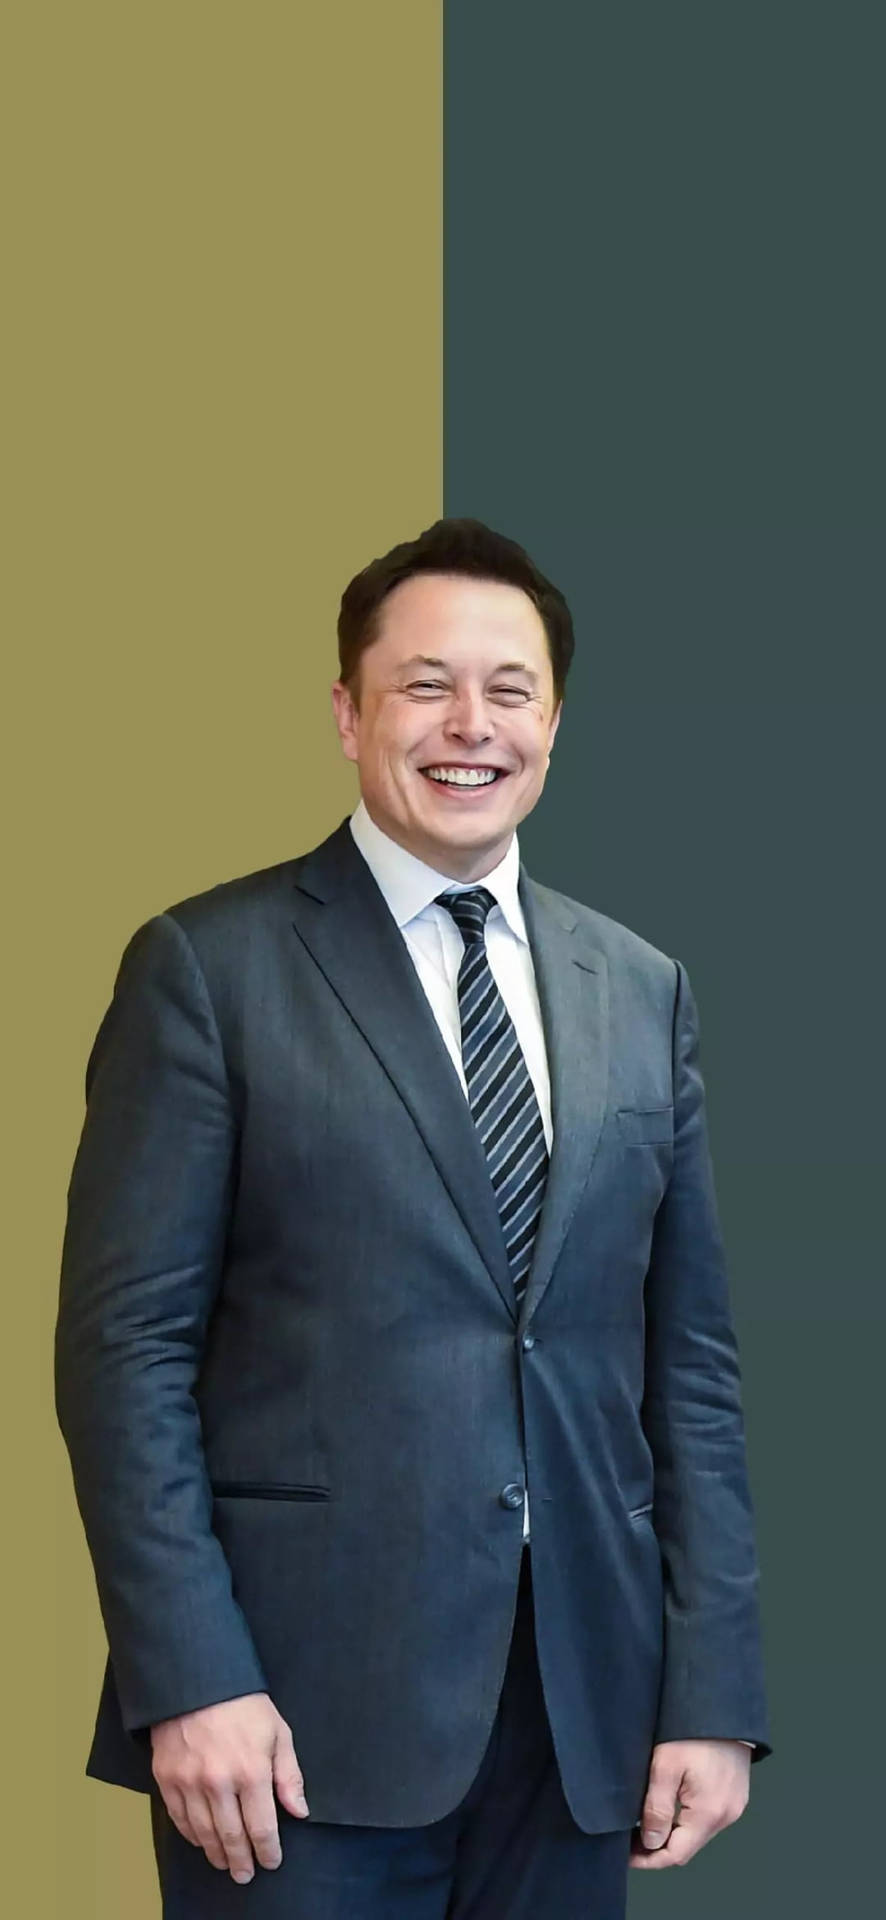 Elon Musk CEO Portrait Art Wallpaper